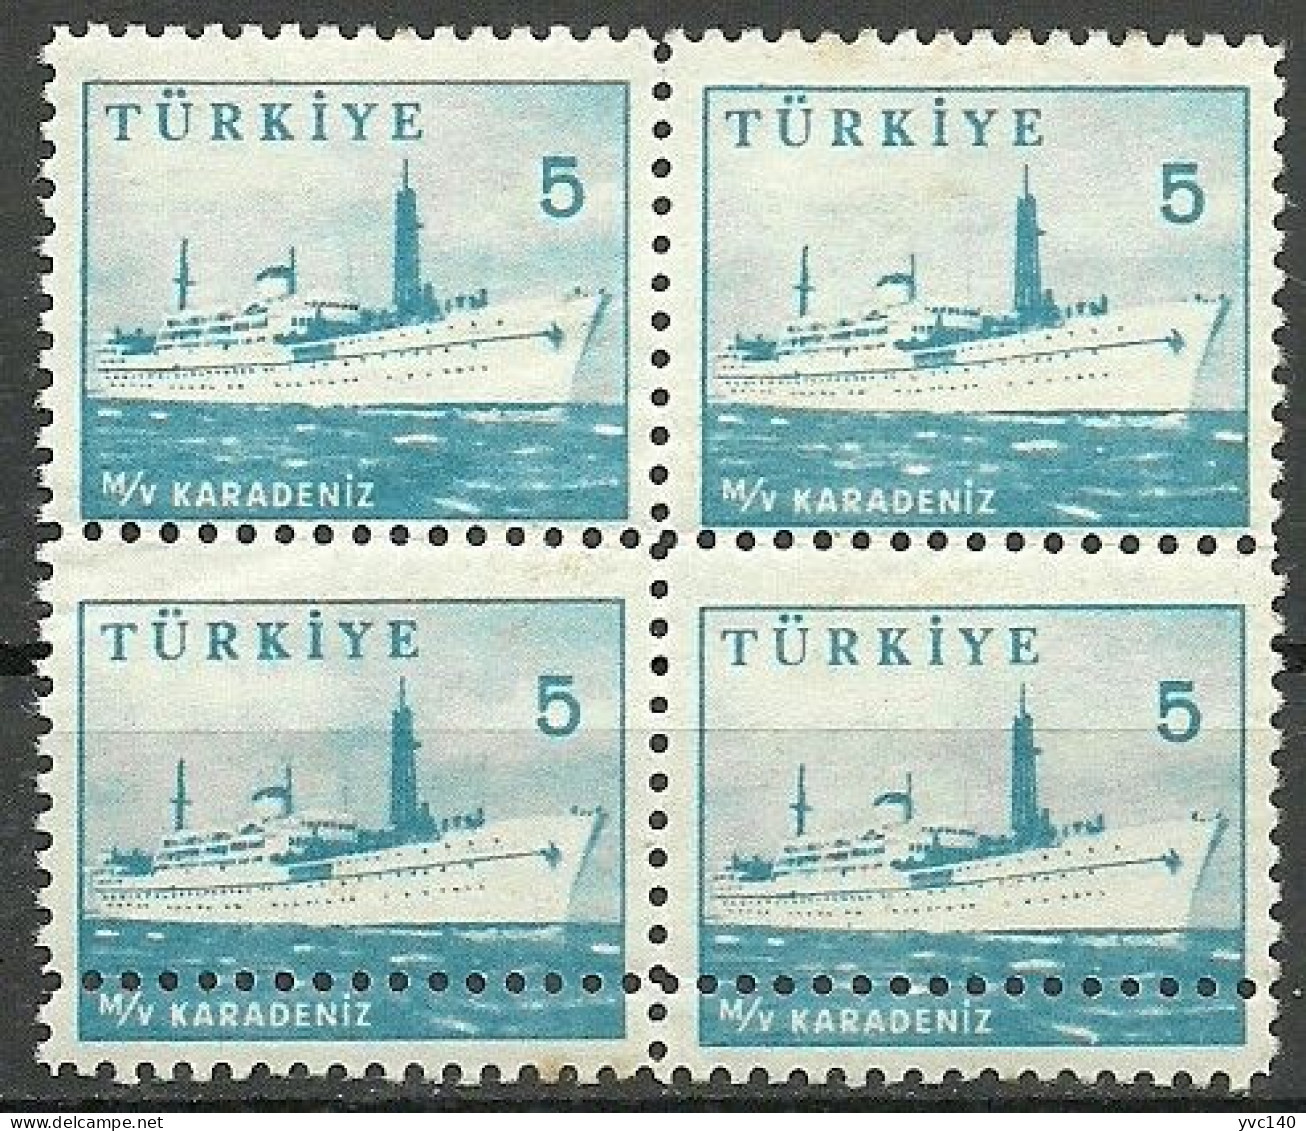 Turkey; 1959 Pictorial Postage Stamp 5 K. ERROR "Doouuble Perf." - Unused Stamps